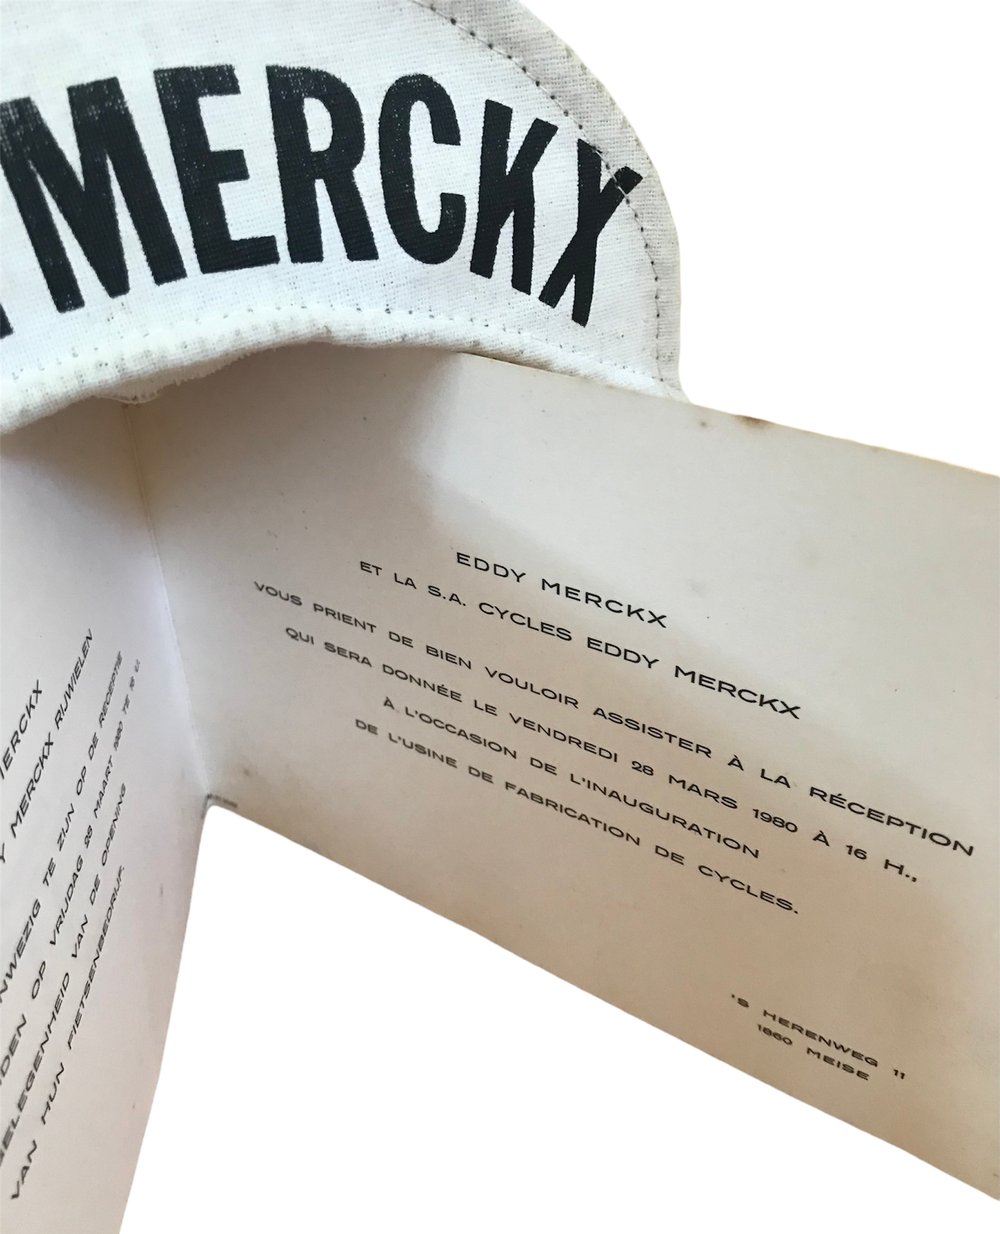 1980 ðŸ‡§ðŸ‡ª S.A. Cycles Eddy Merckx -  Invitation card for the inauguration of the factory